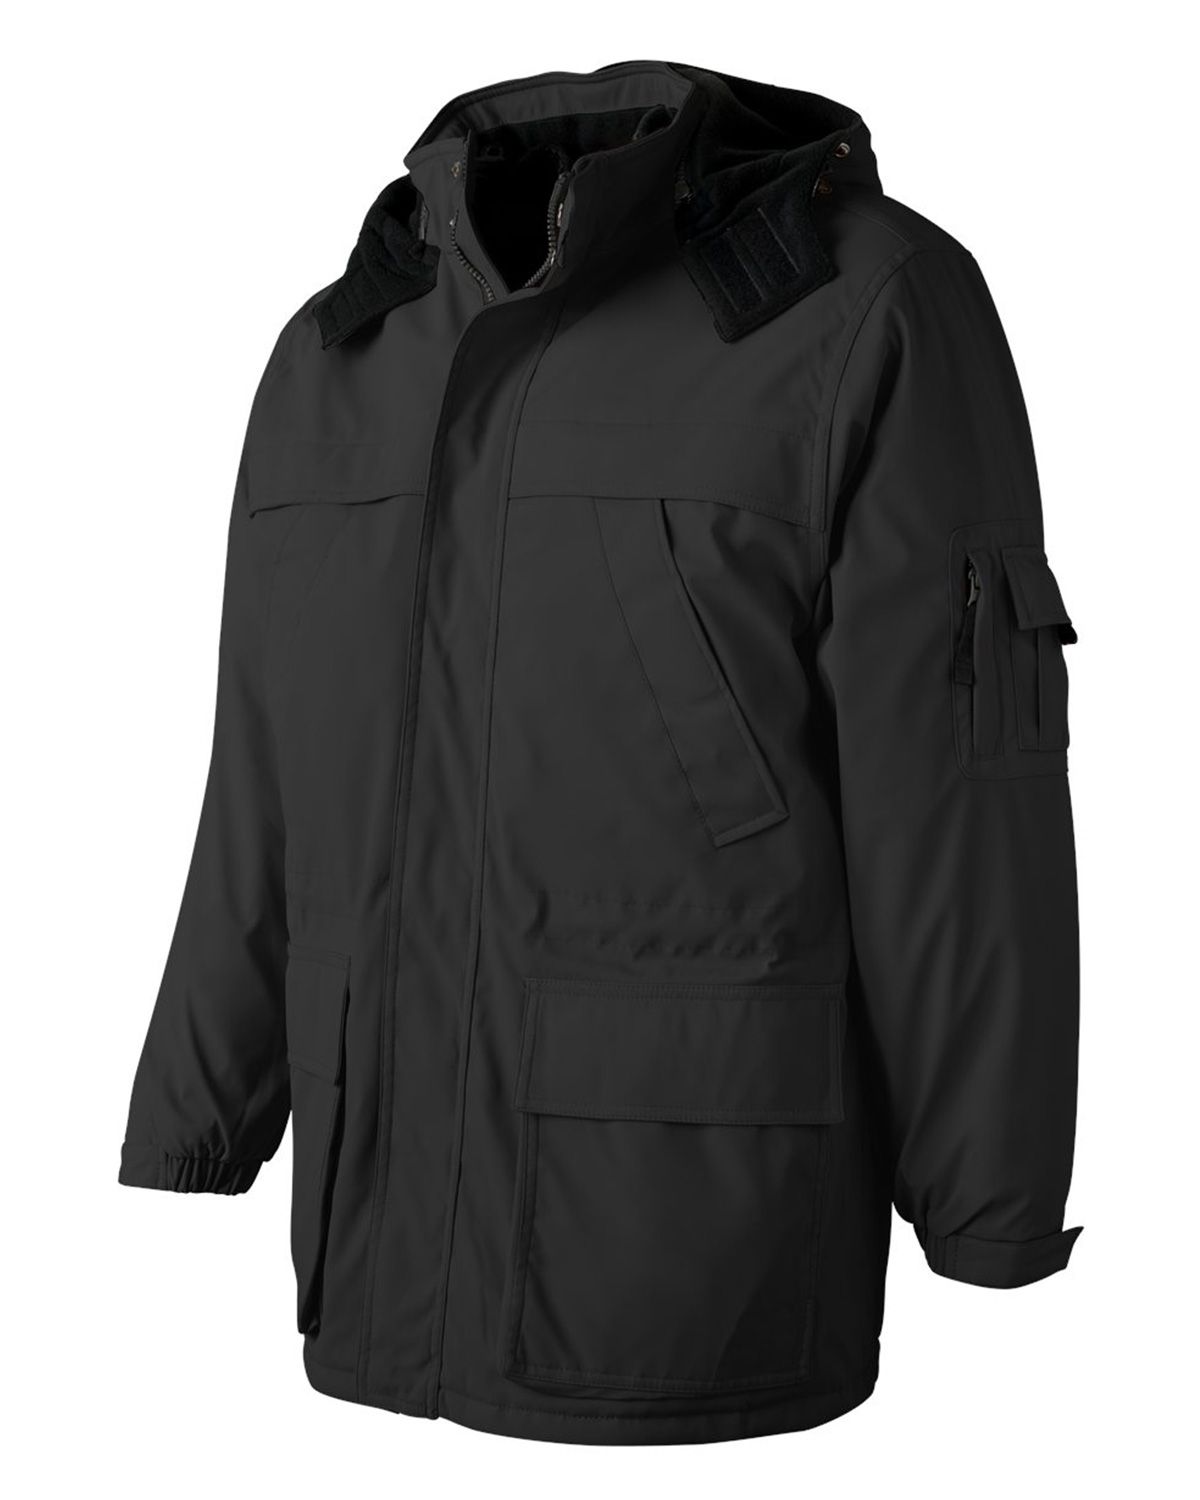 Weatherproof 6086 Men's 3-in-1 Systems Jacket